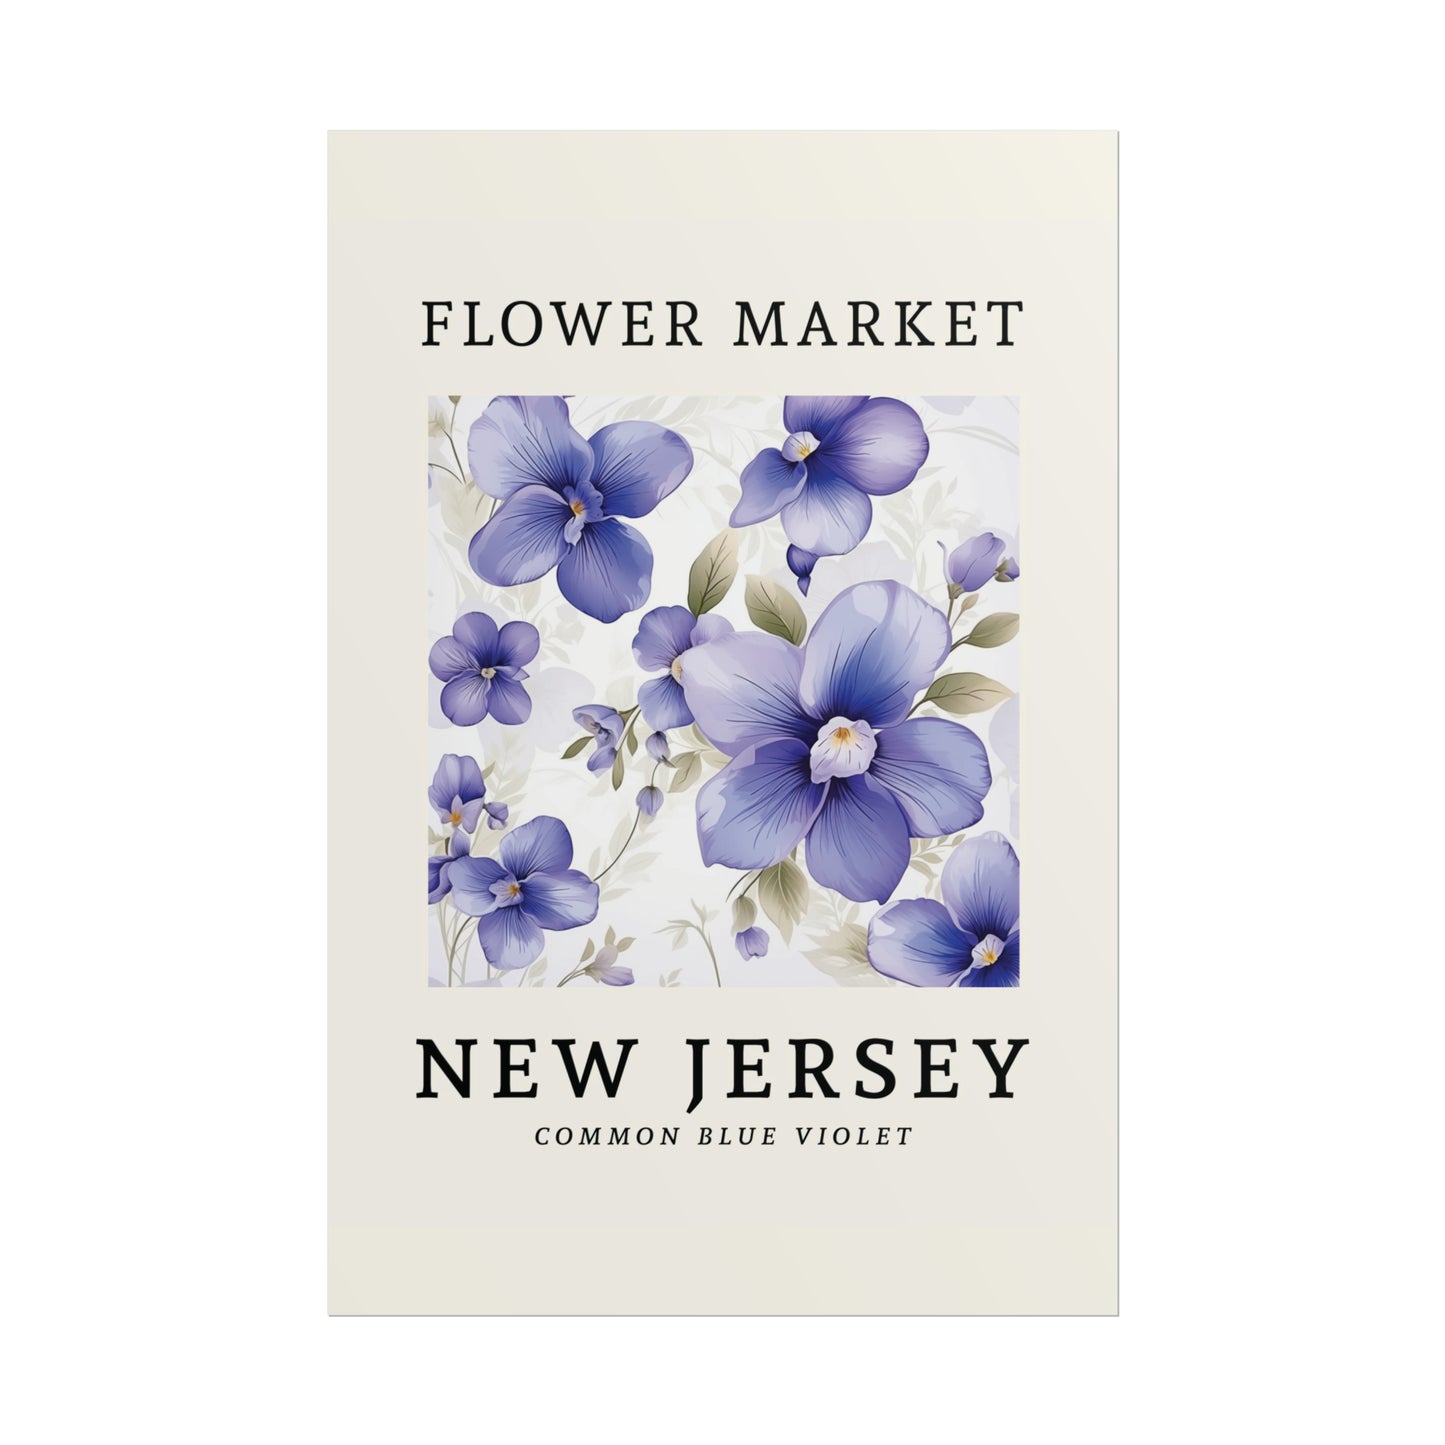 New Jersey FLOWER MARKET Poster Common Blue Violet Blossoms Print